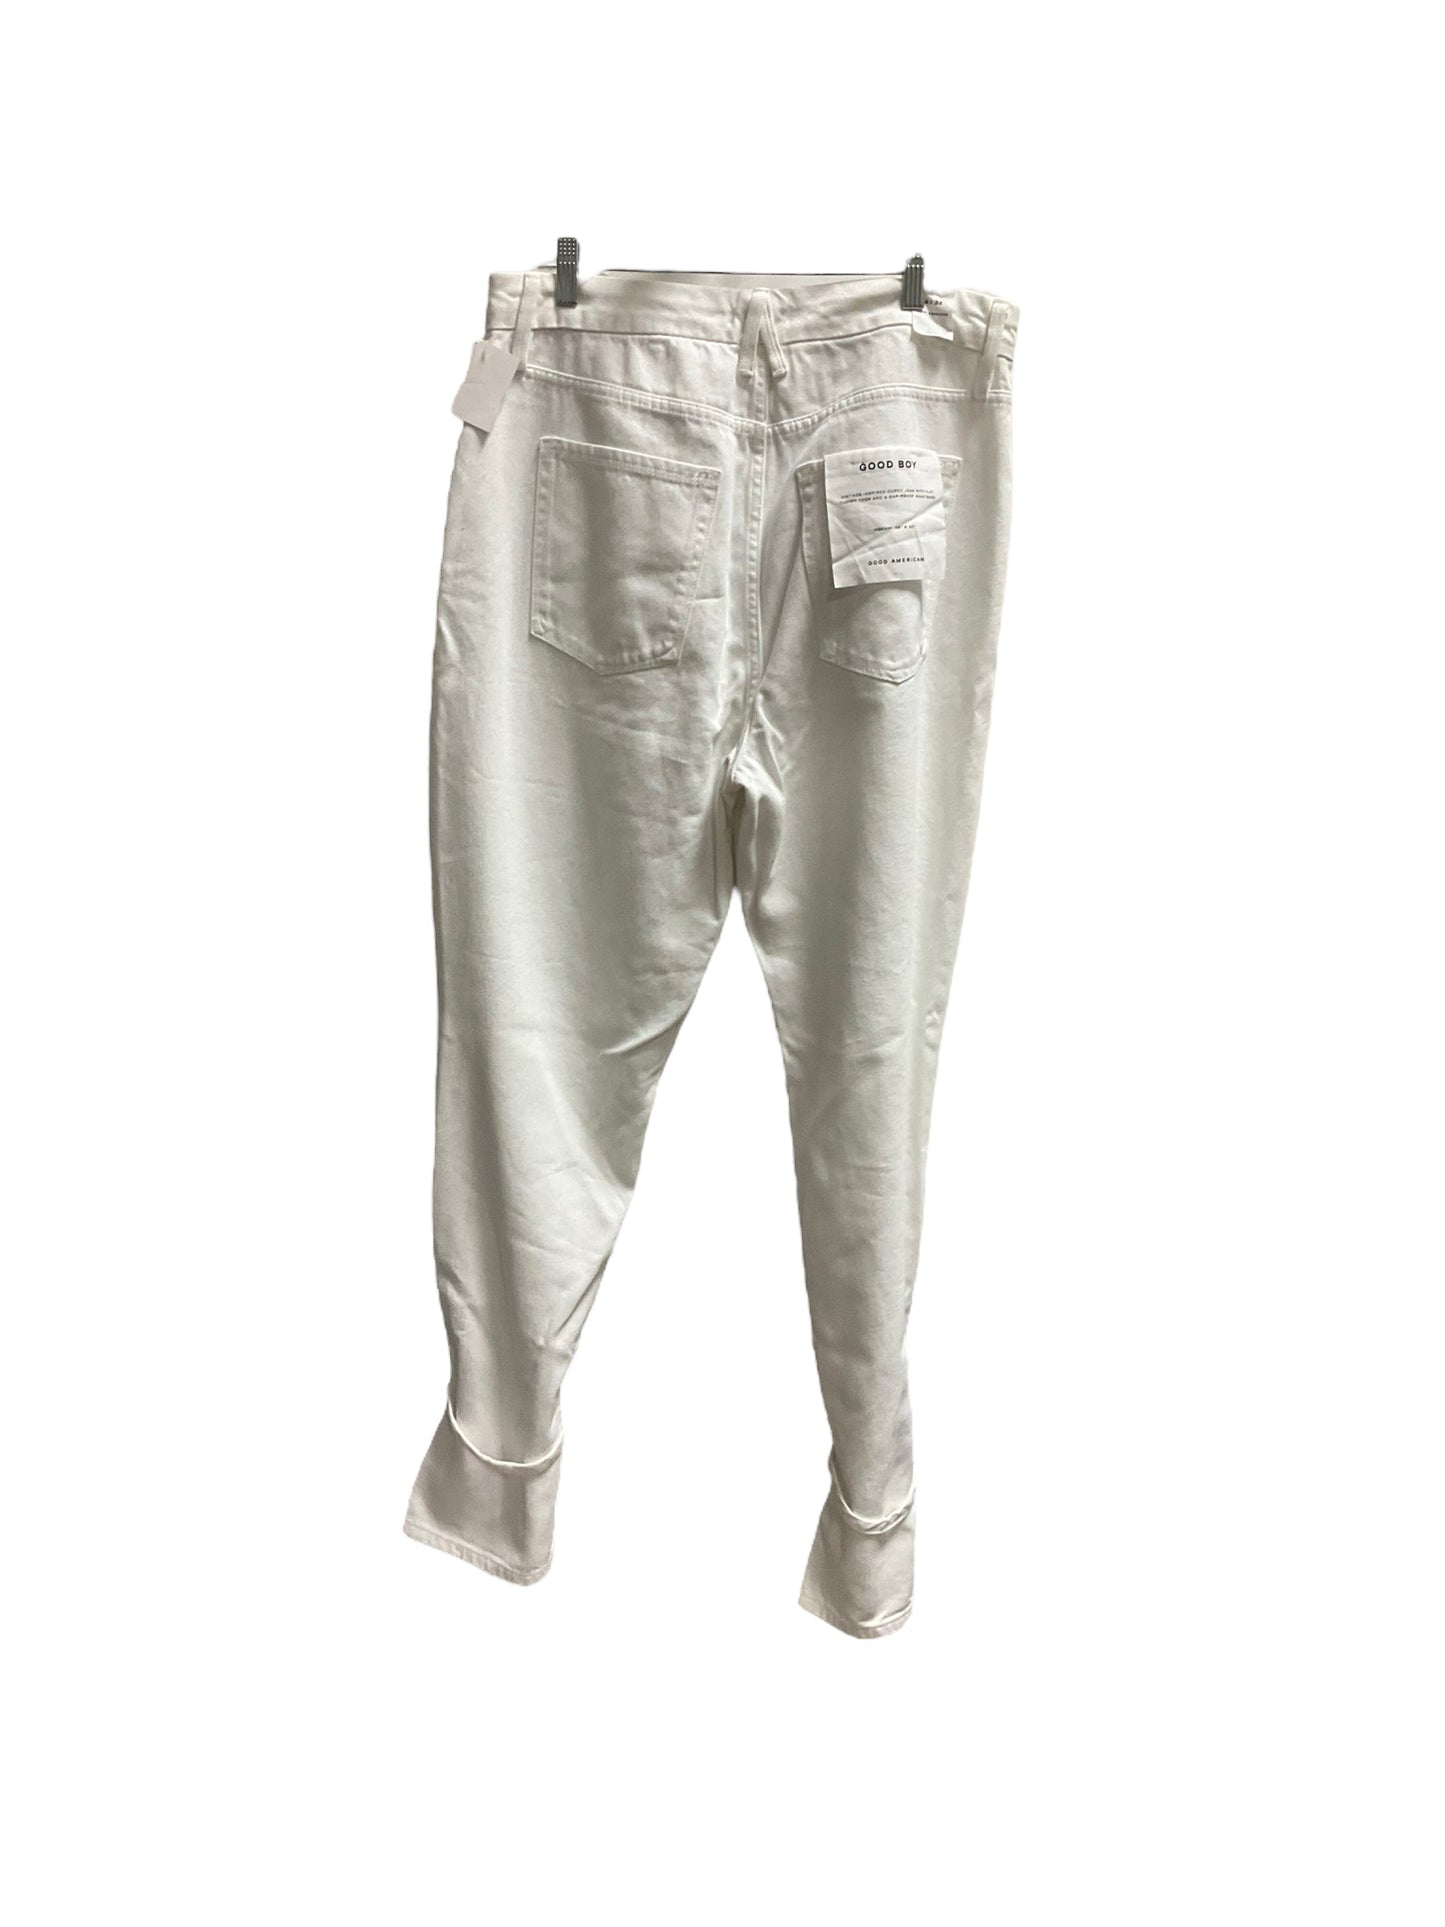 White Jeans Designer Good American, Size 14